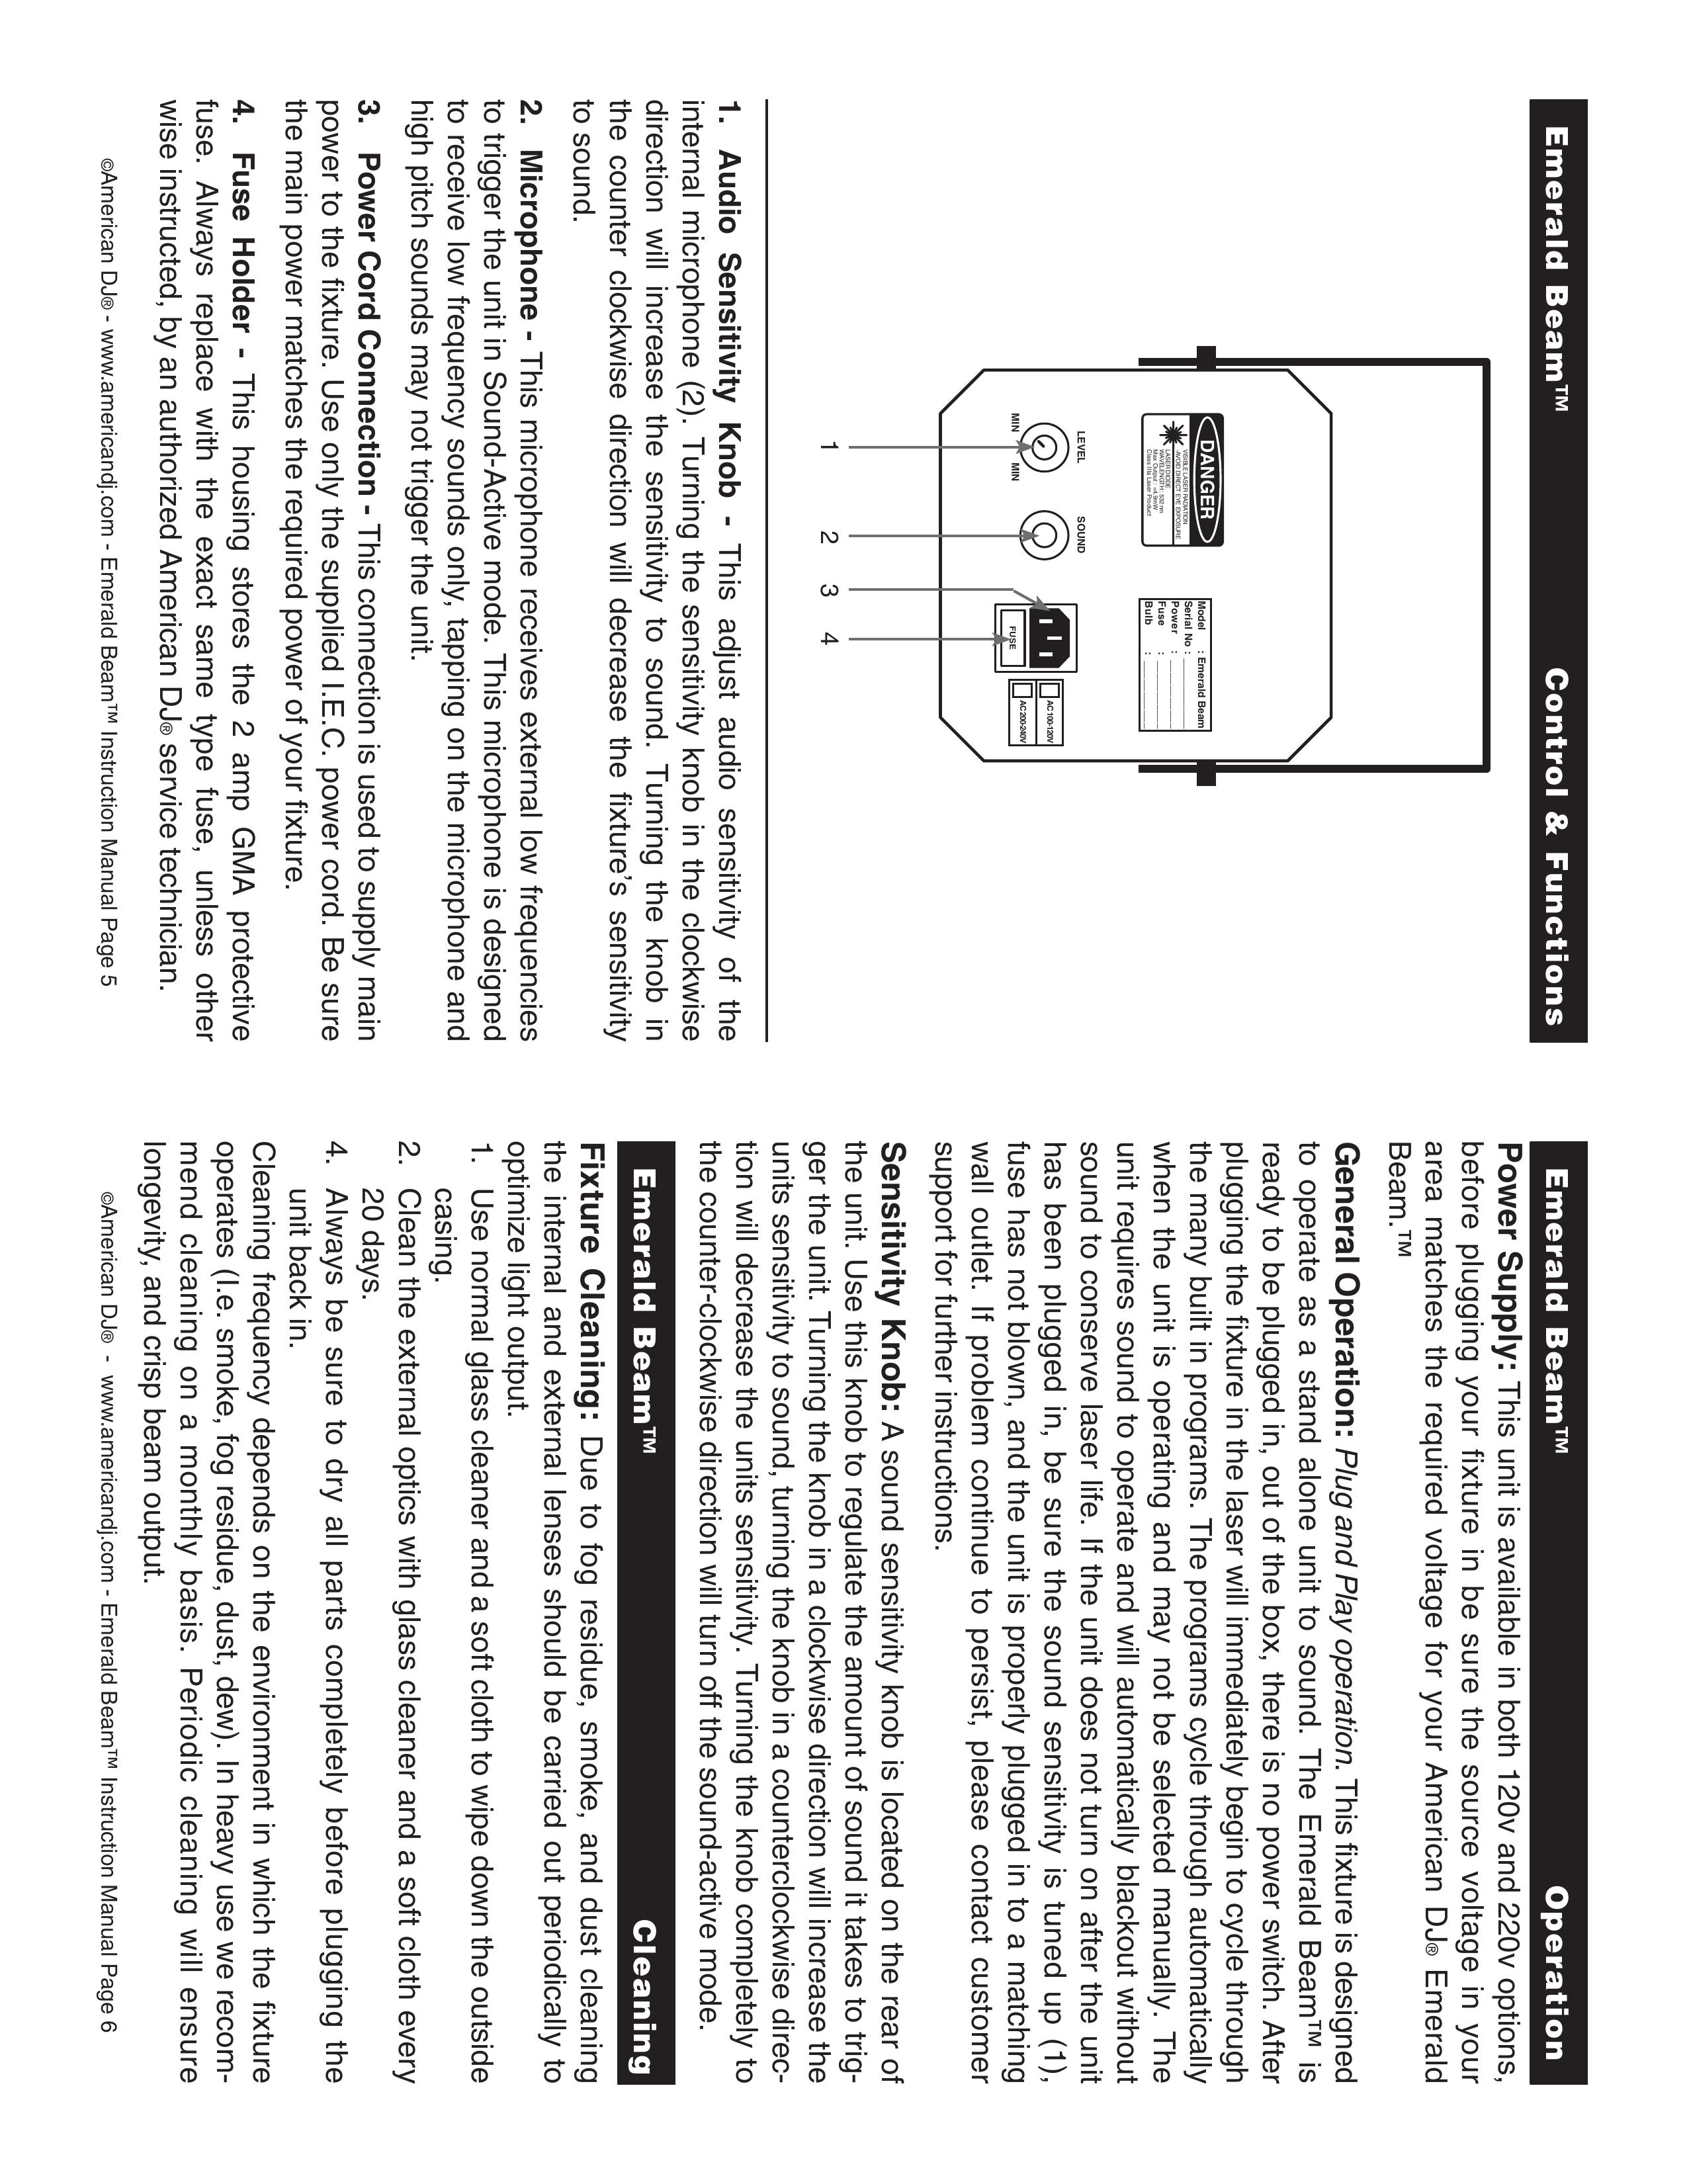 American DJ Emrald Beam DJ Equipment User Manual (Page 3)